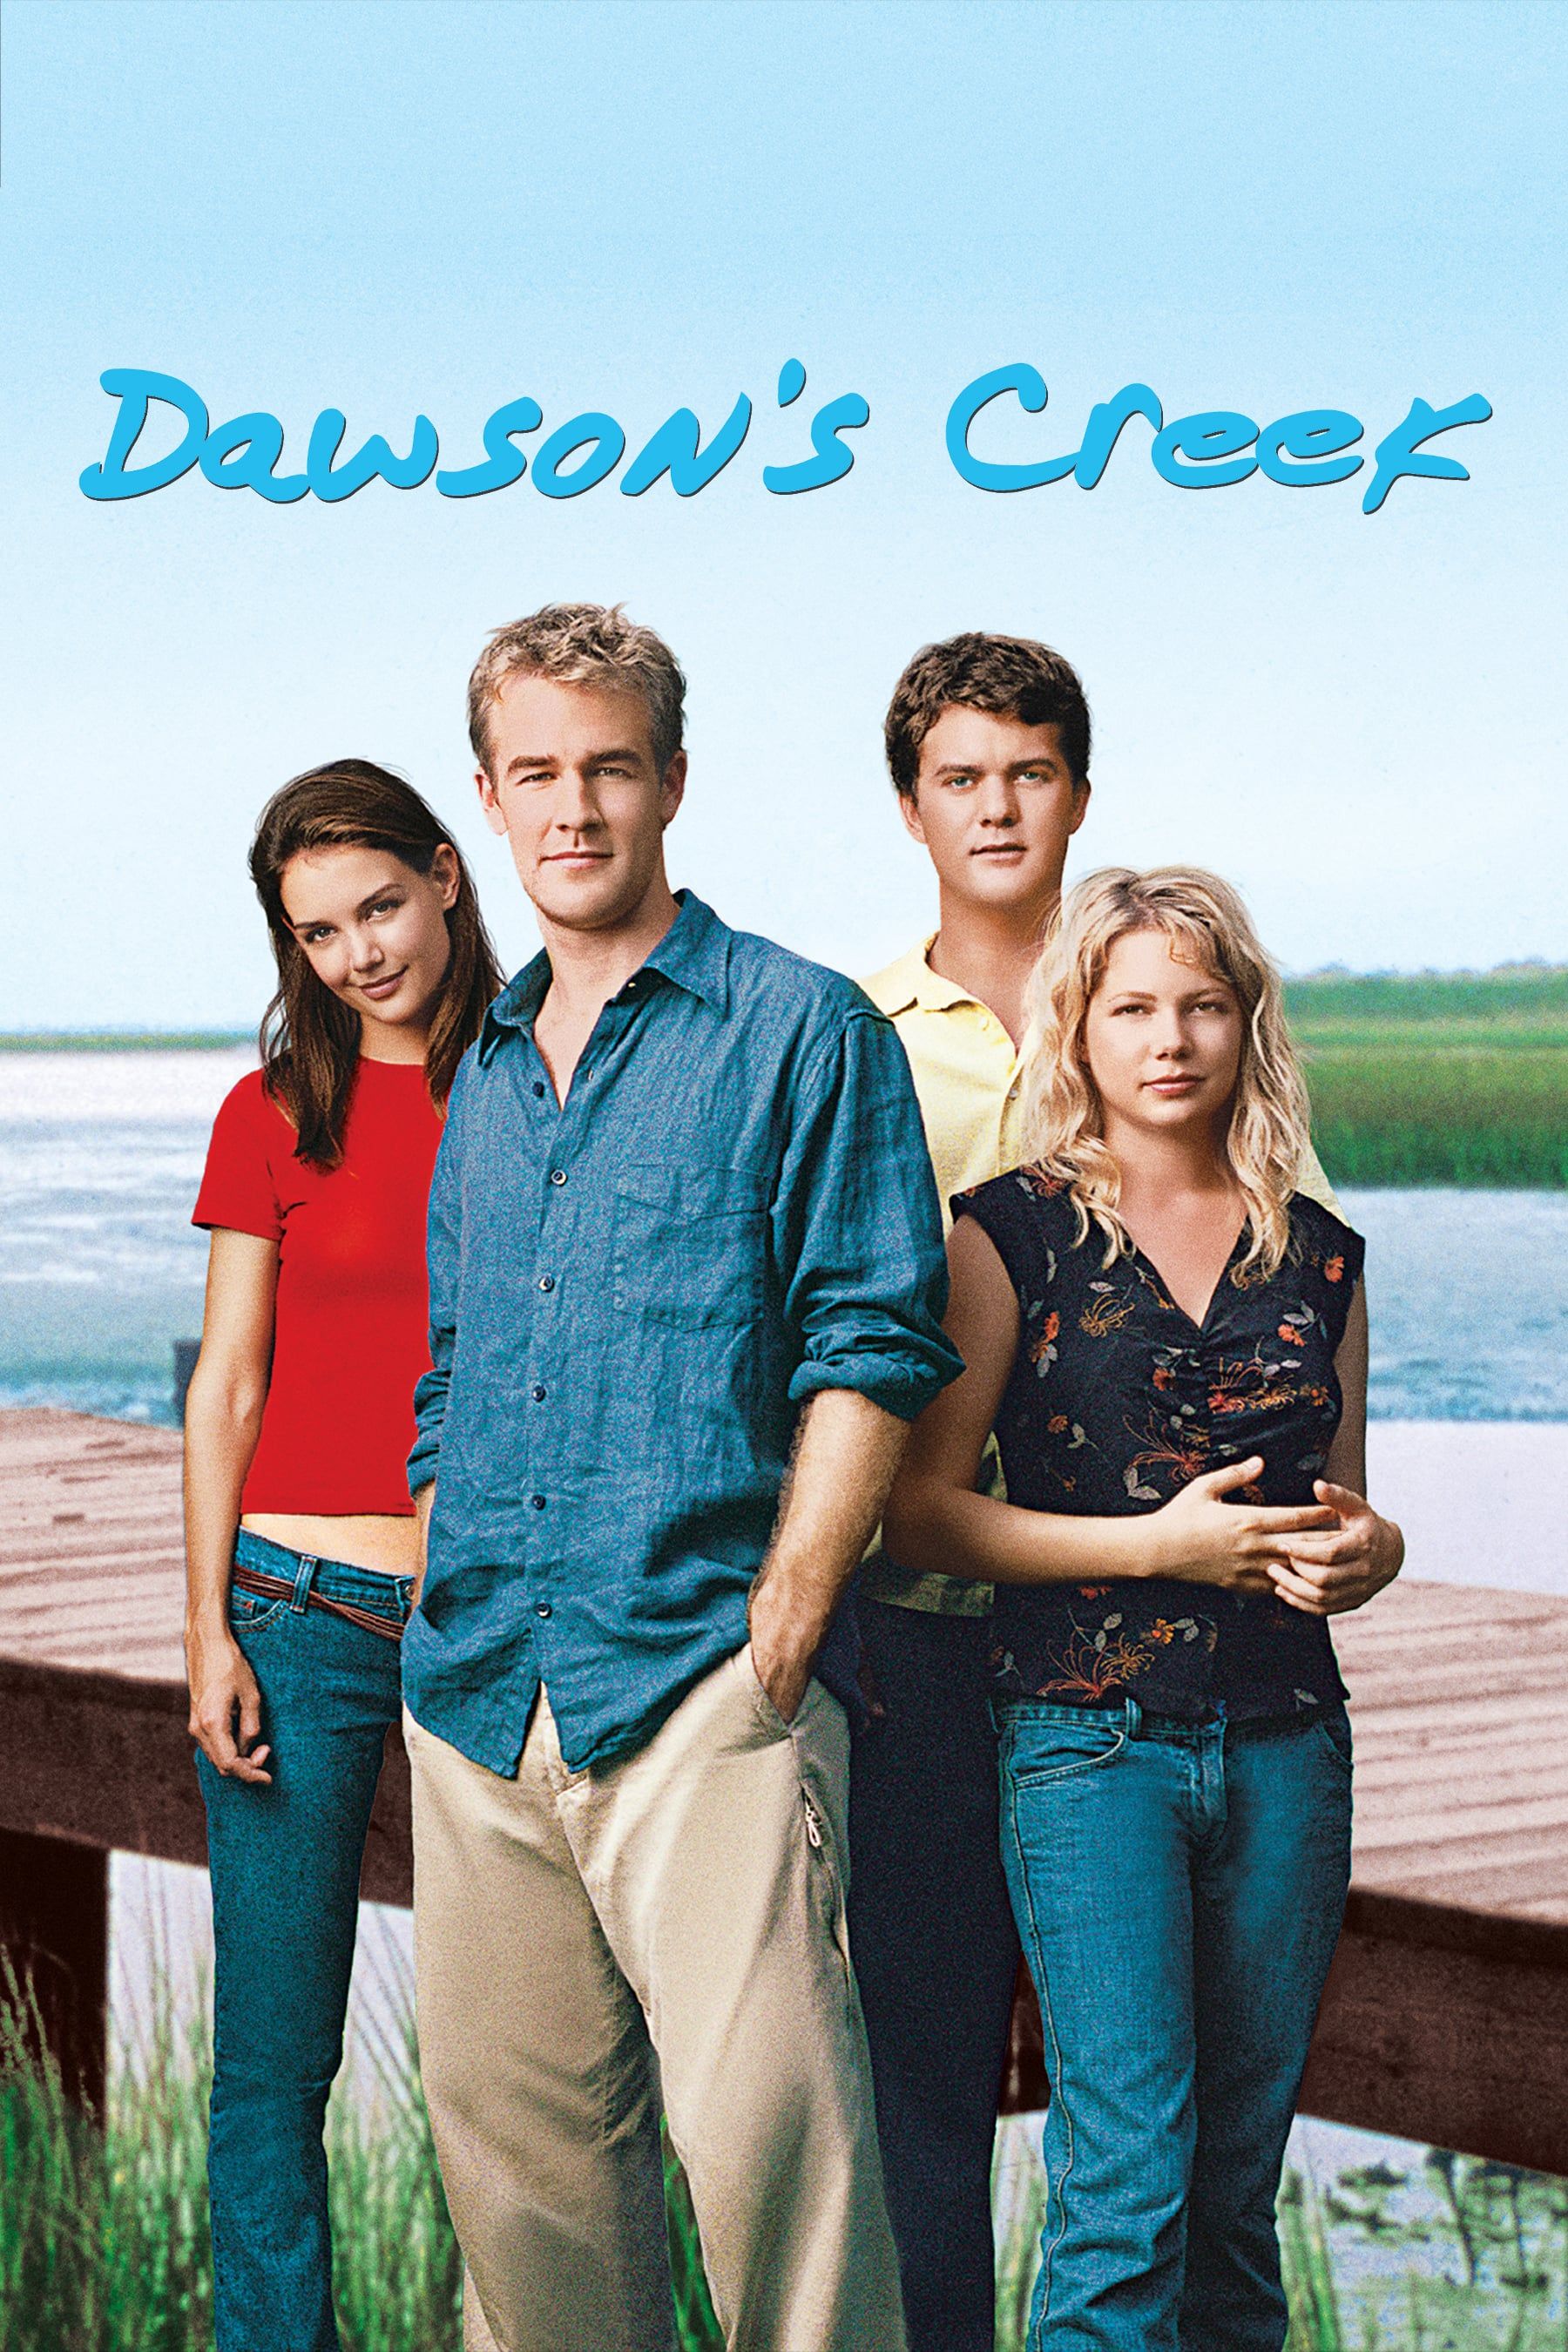 dawsons creek (1998) MovieWeb